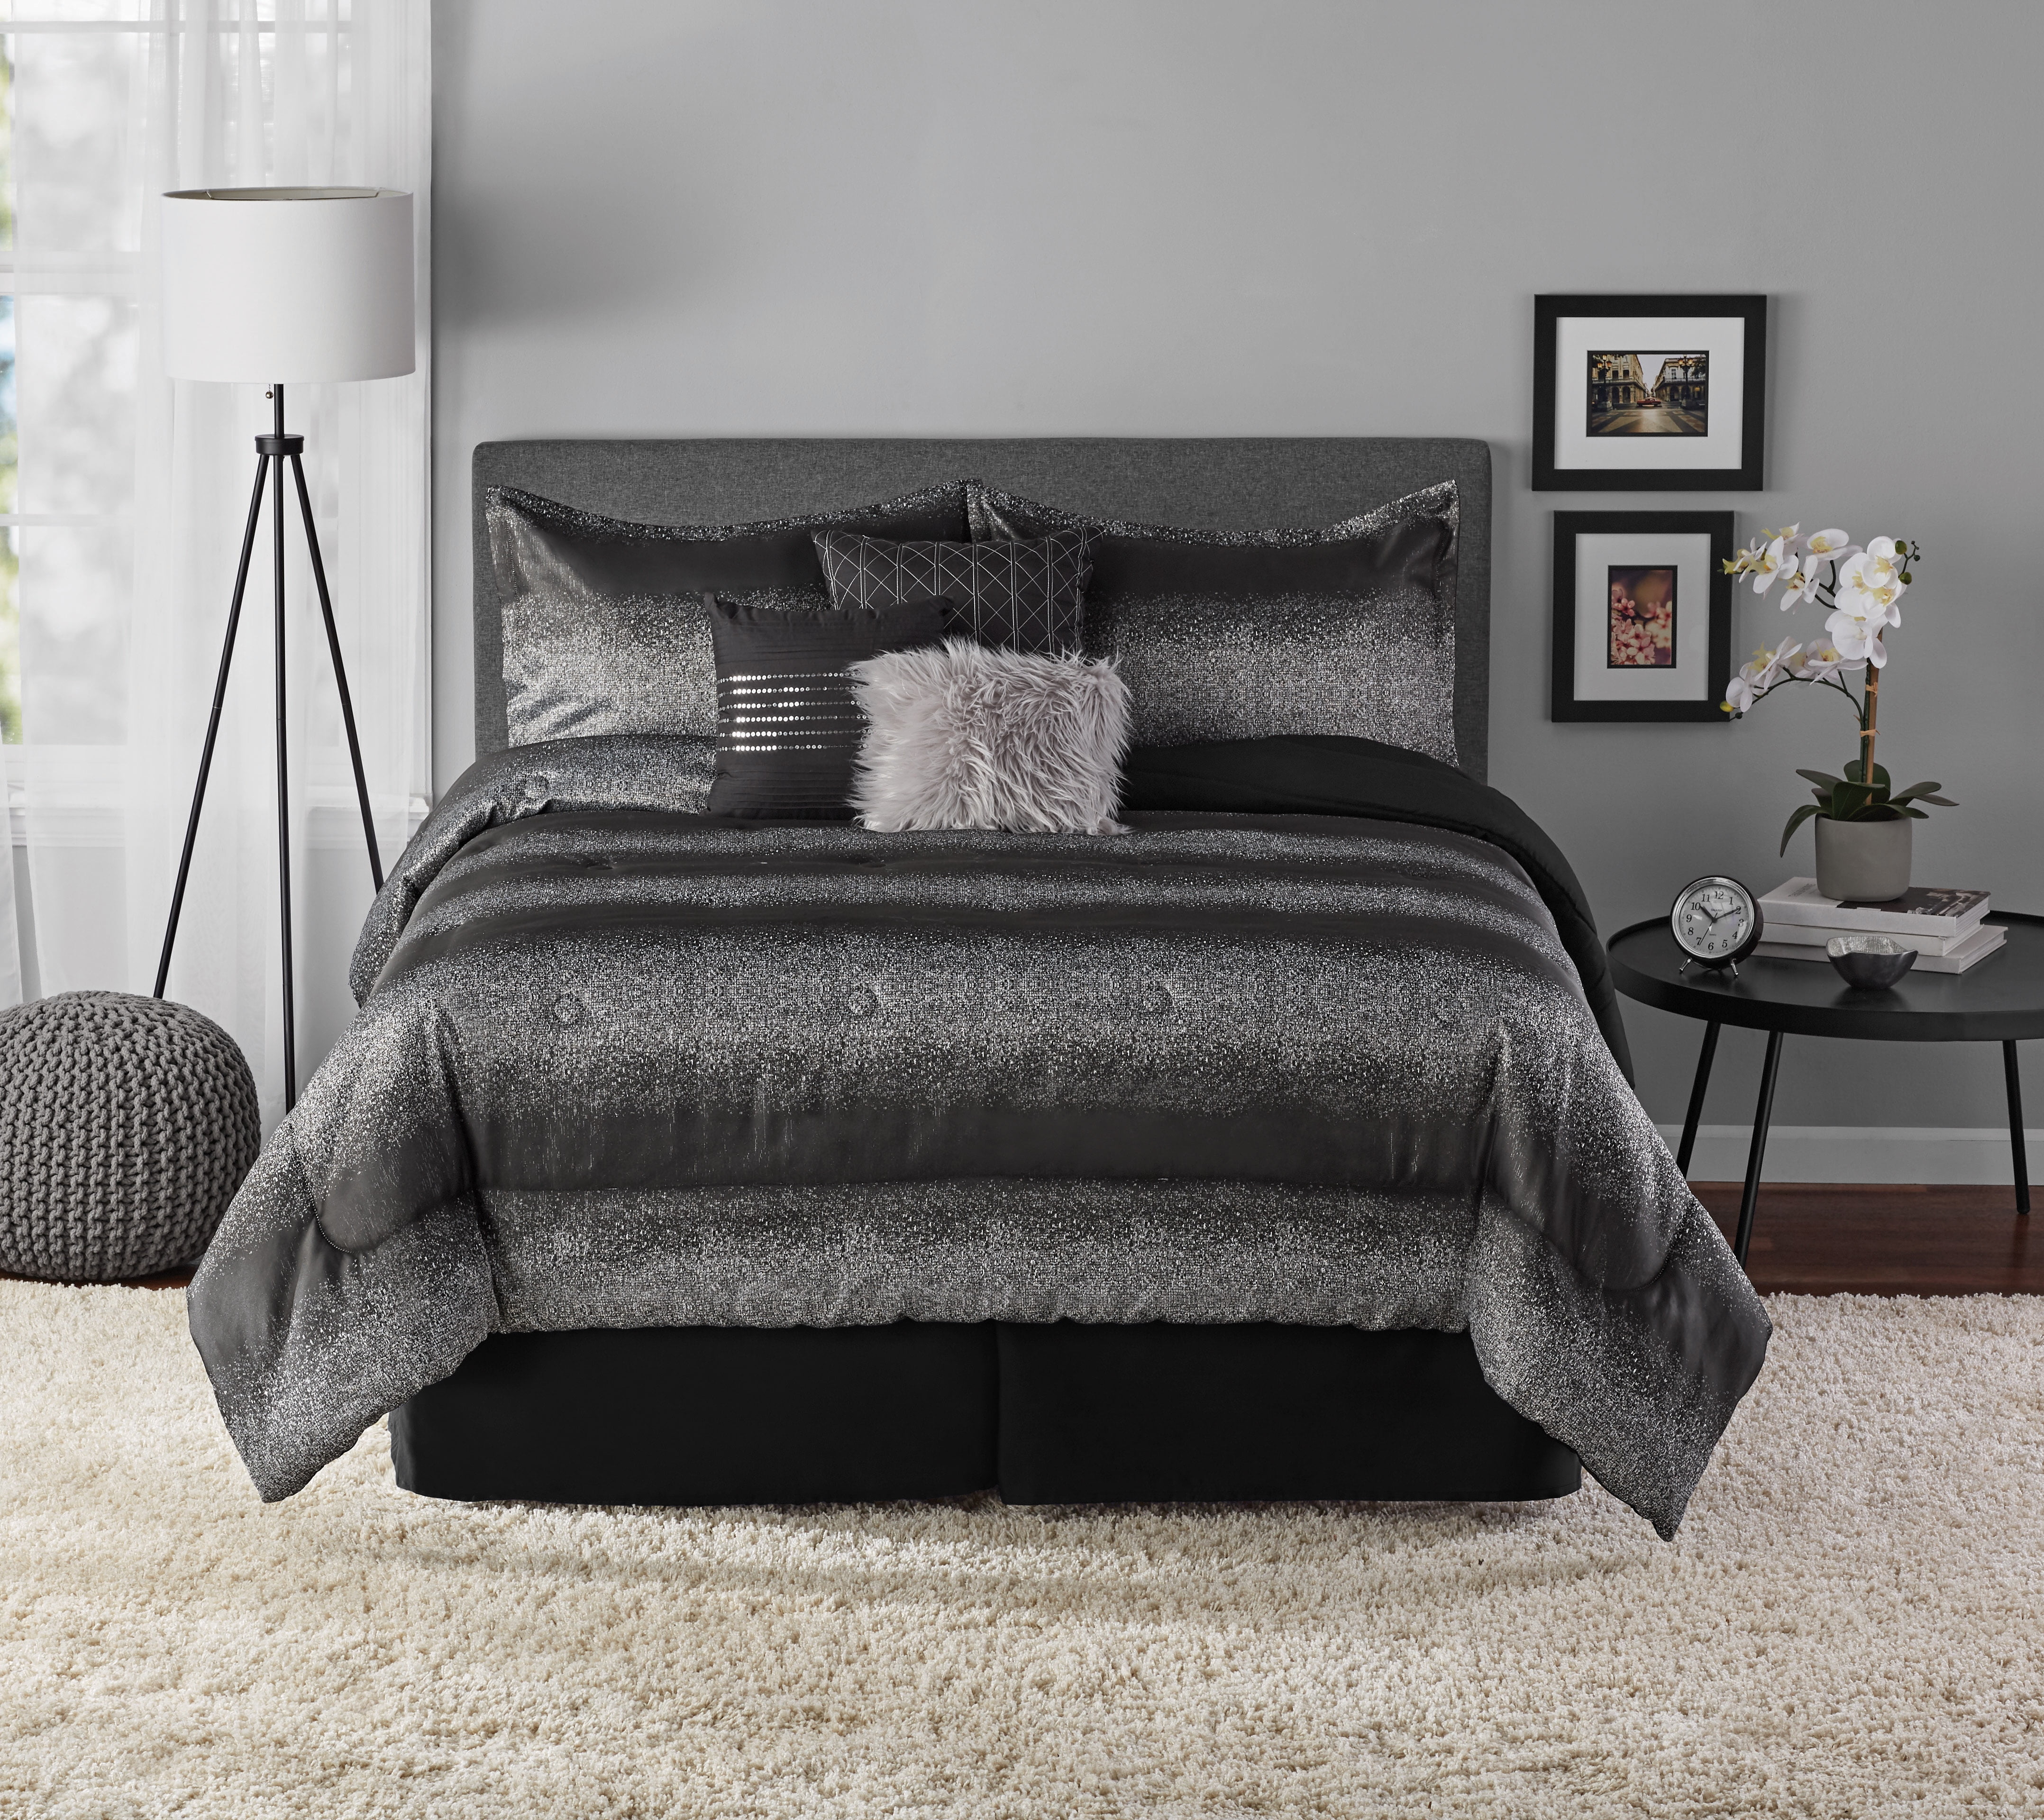 Mainstays 7-Piece Metallic Stripe Jacquard Comforter Set, Black and Silver, Full/Queen